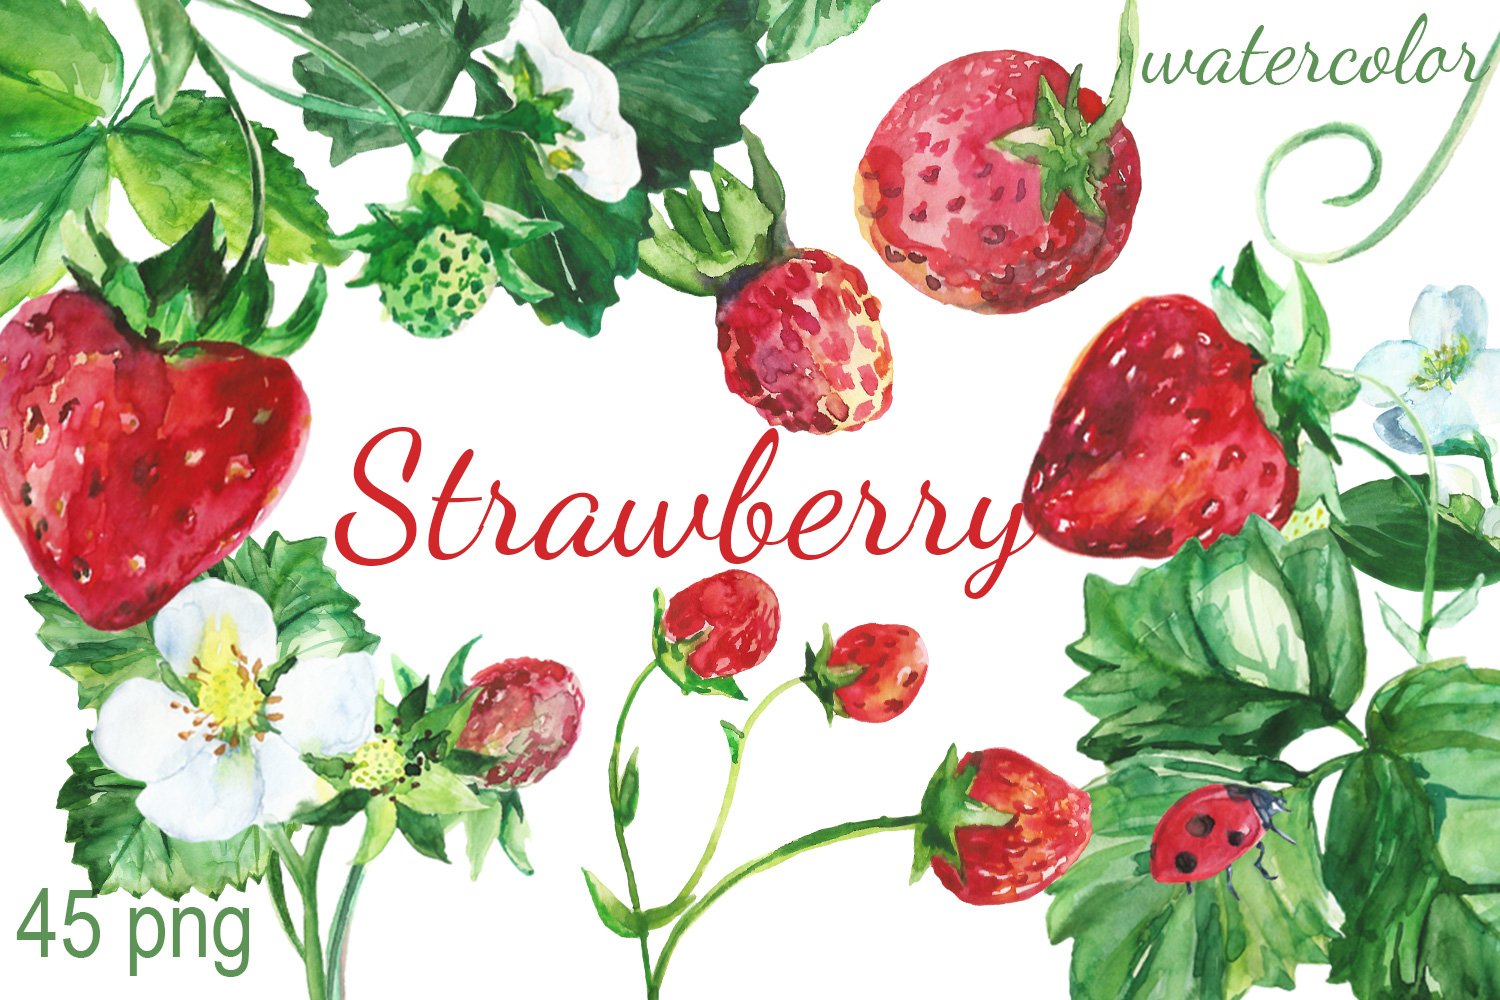 So bright strawberry illustration.